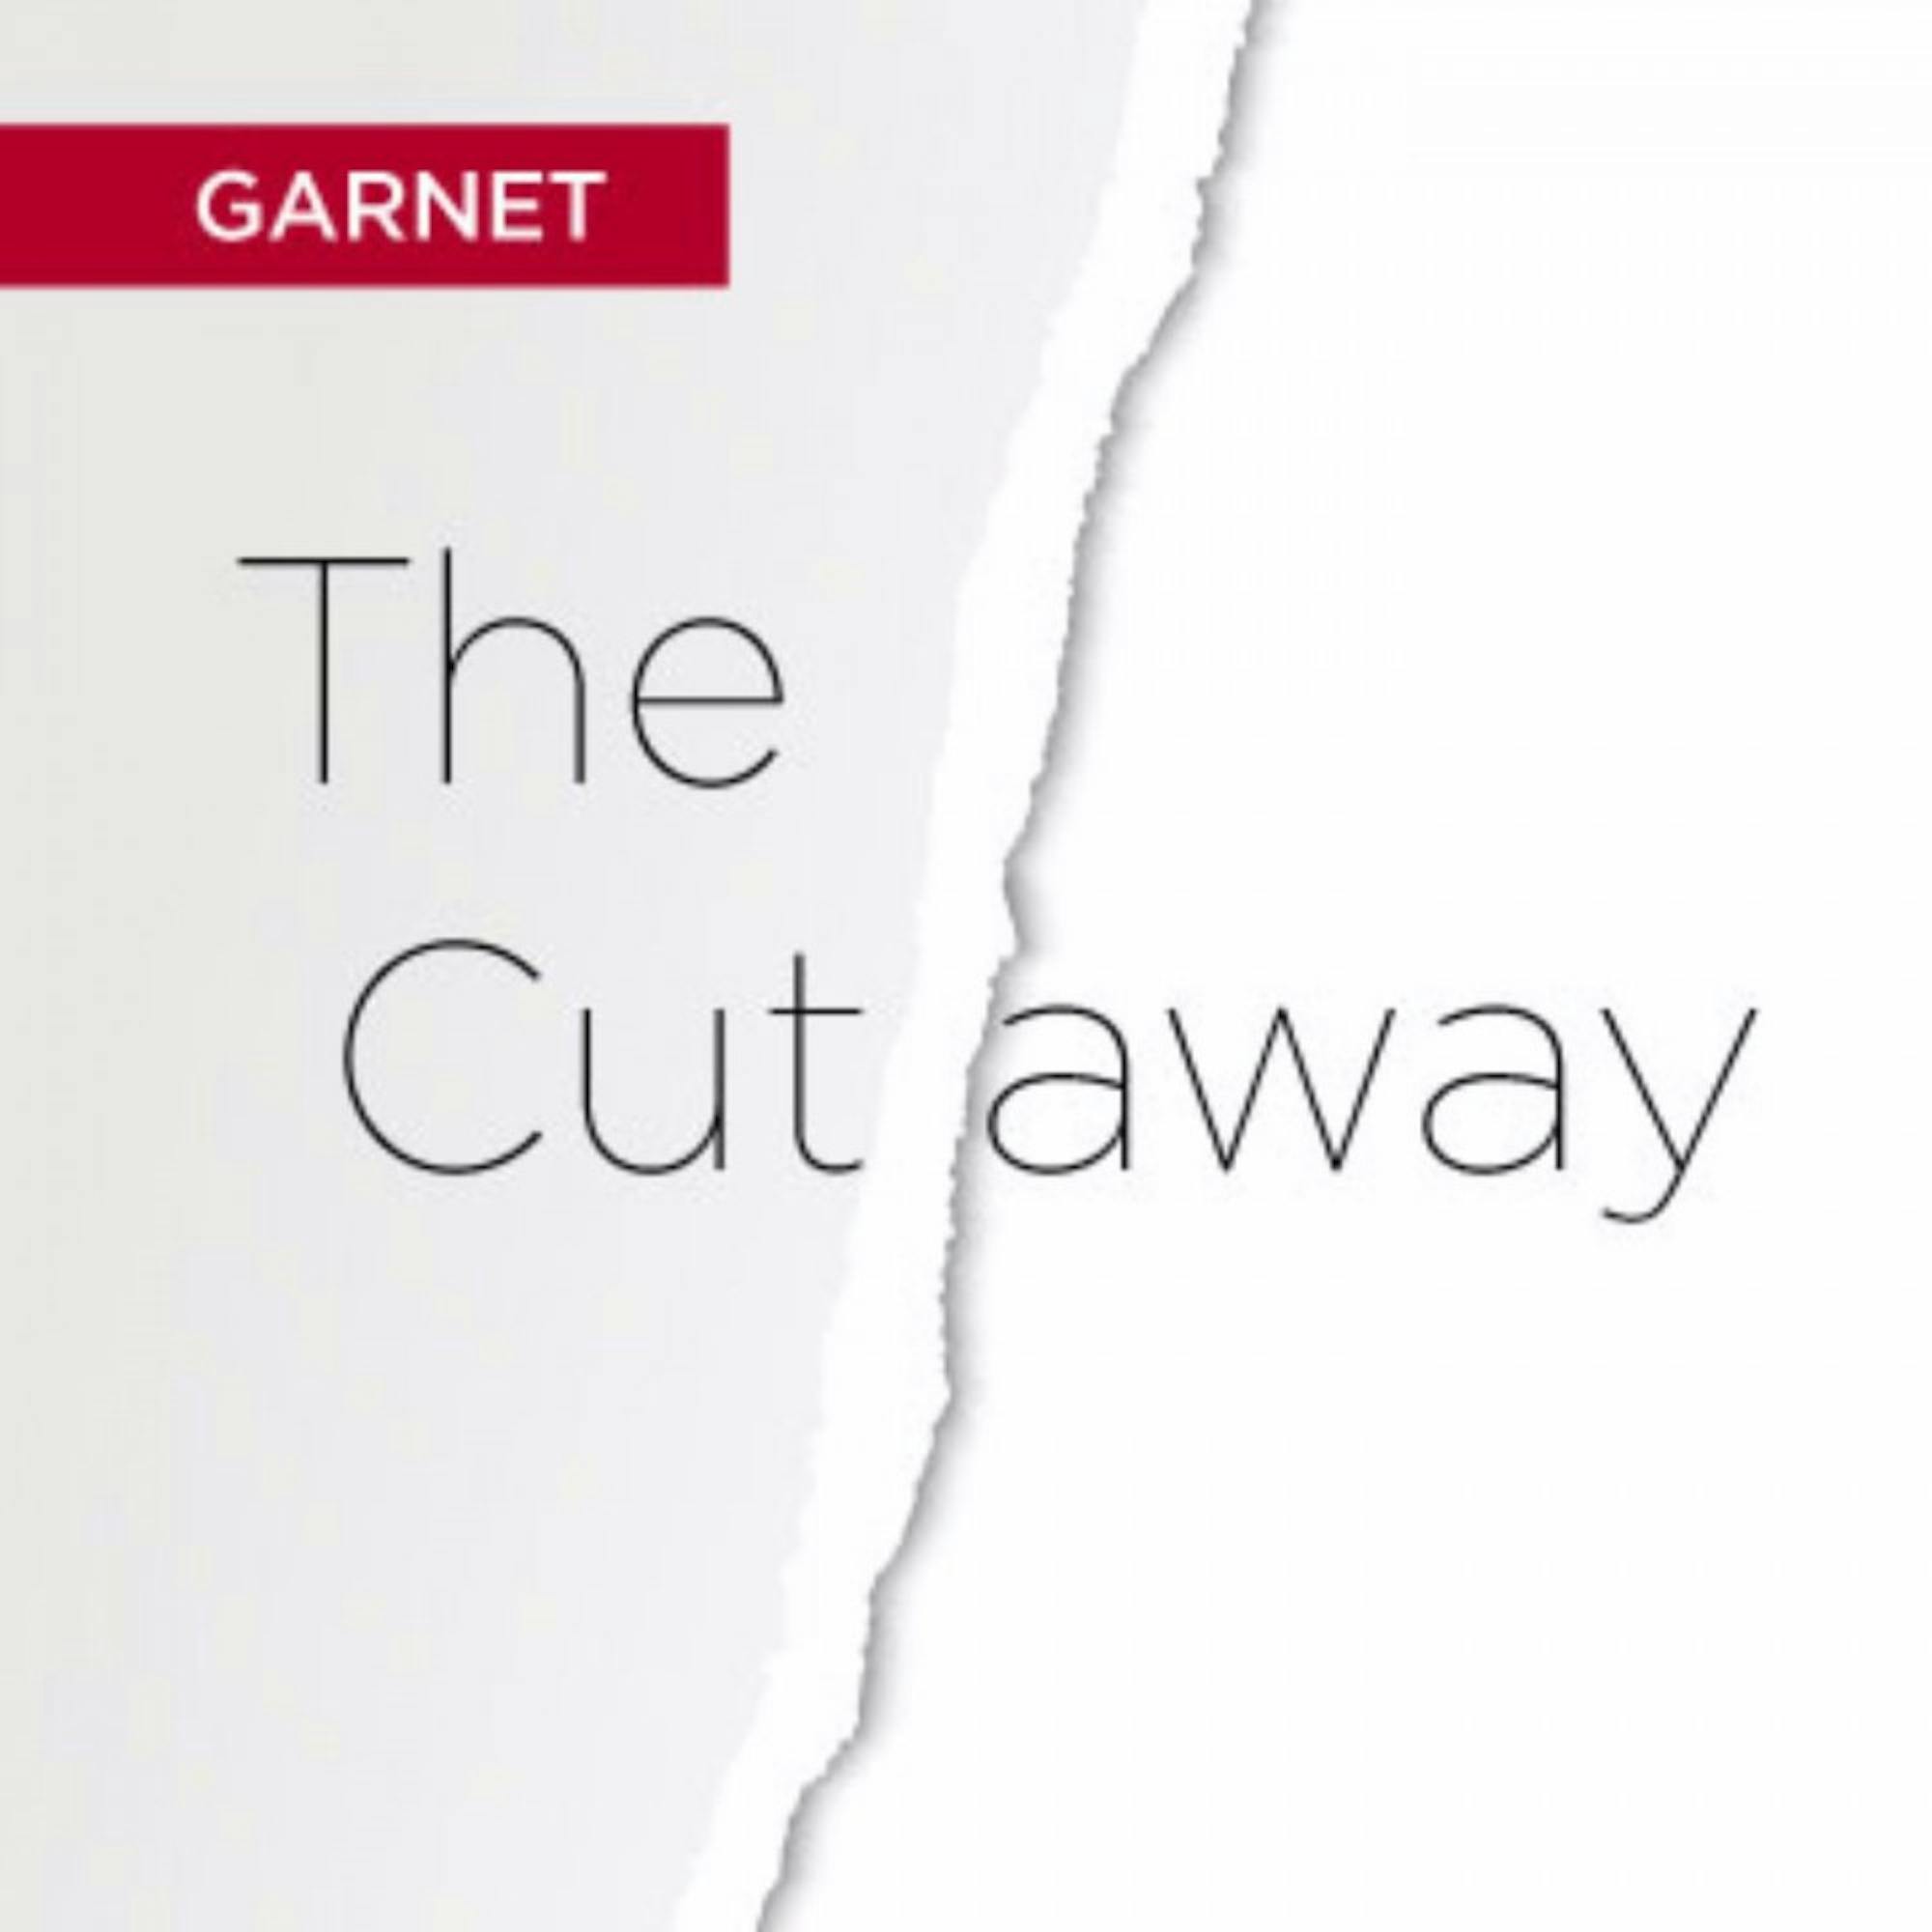 Cutaway_GarnetMediaGroup_5x5_4C_2Oct2017.jpg